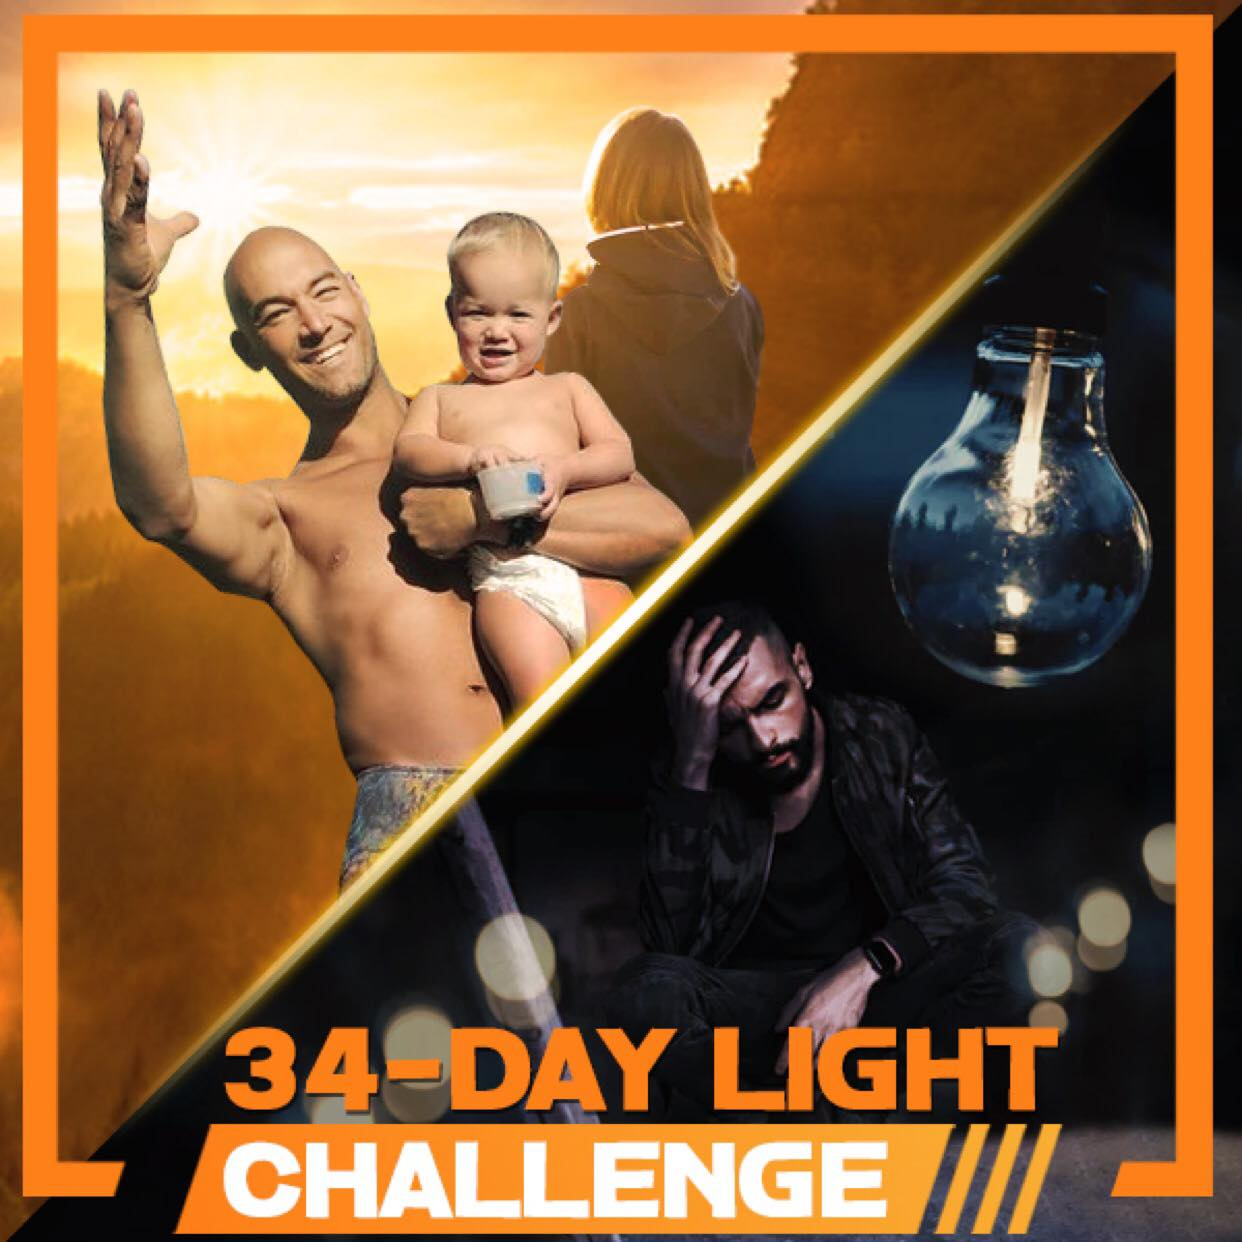 34-day light challenge jason yun